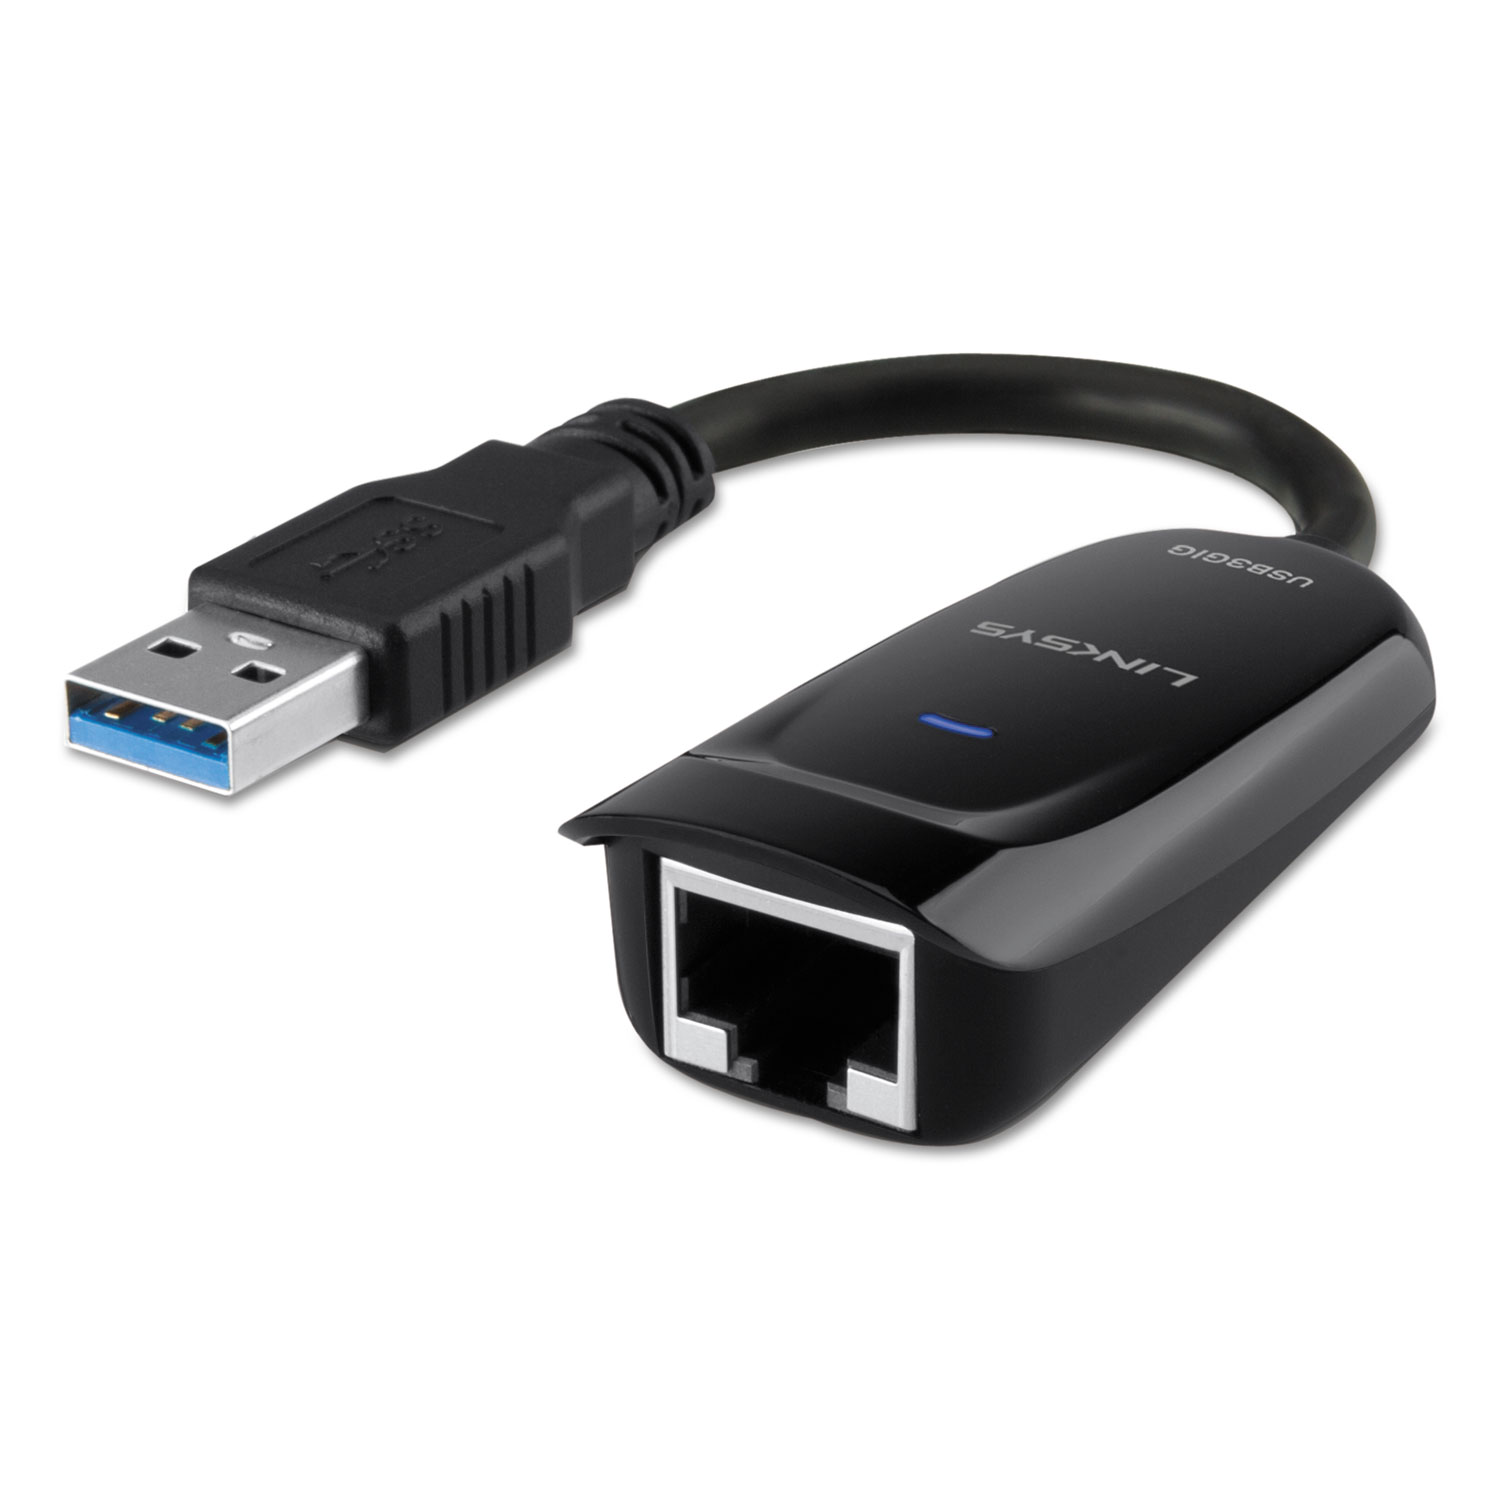  LINKSYS USB3GIG USB 3.0 to Gigabit Ethernet Adapter, Black (LNKUSB3GIG) 